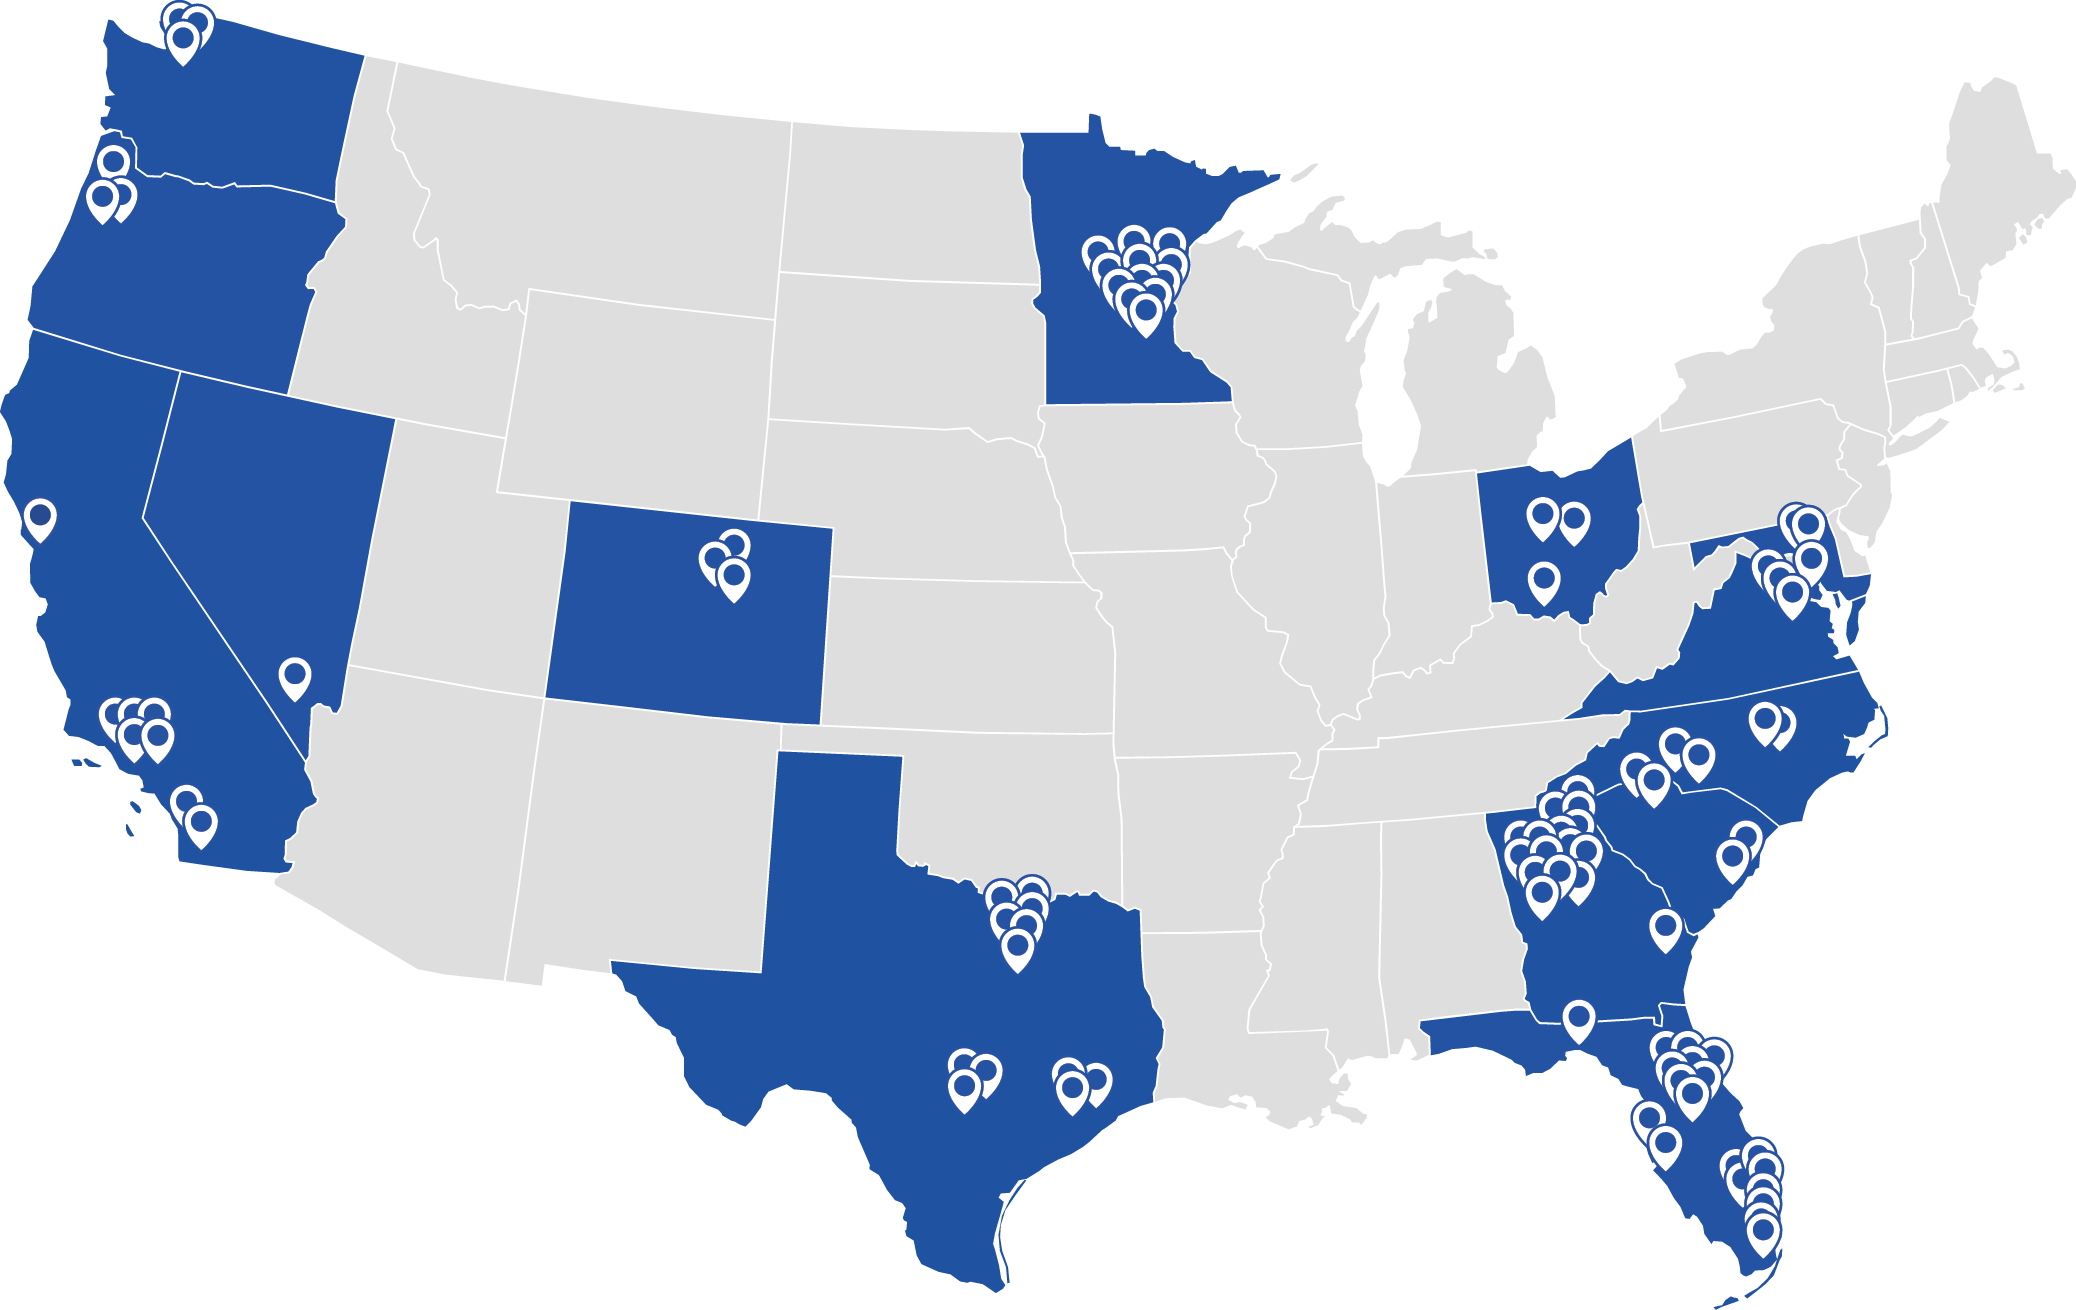 Endeavor School Map of Locations